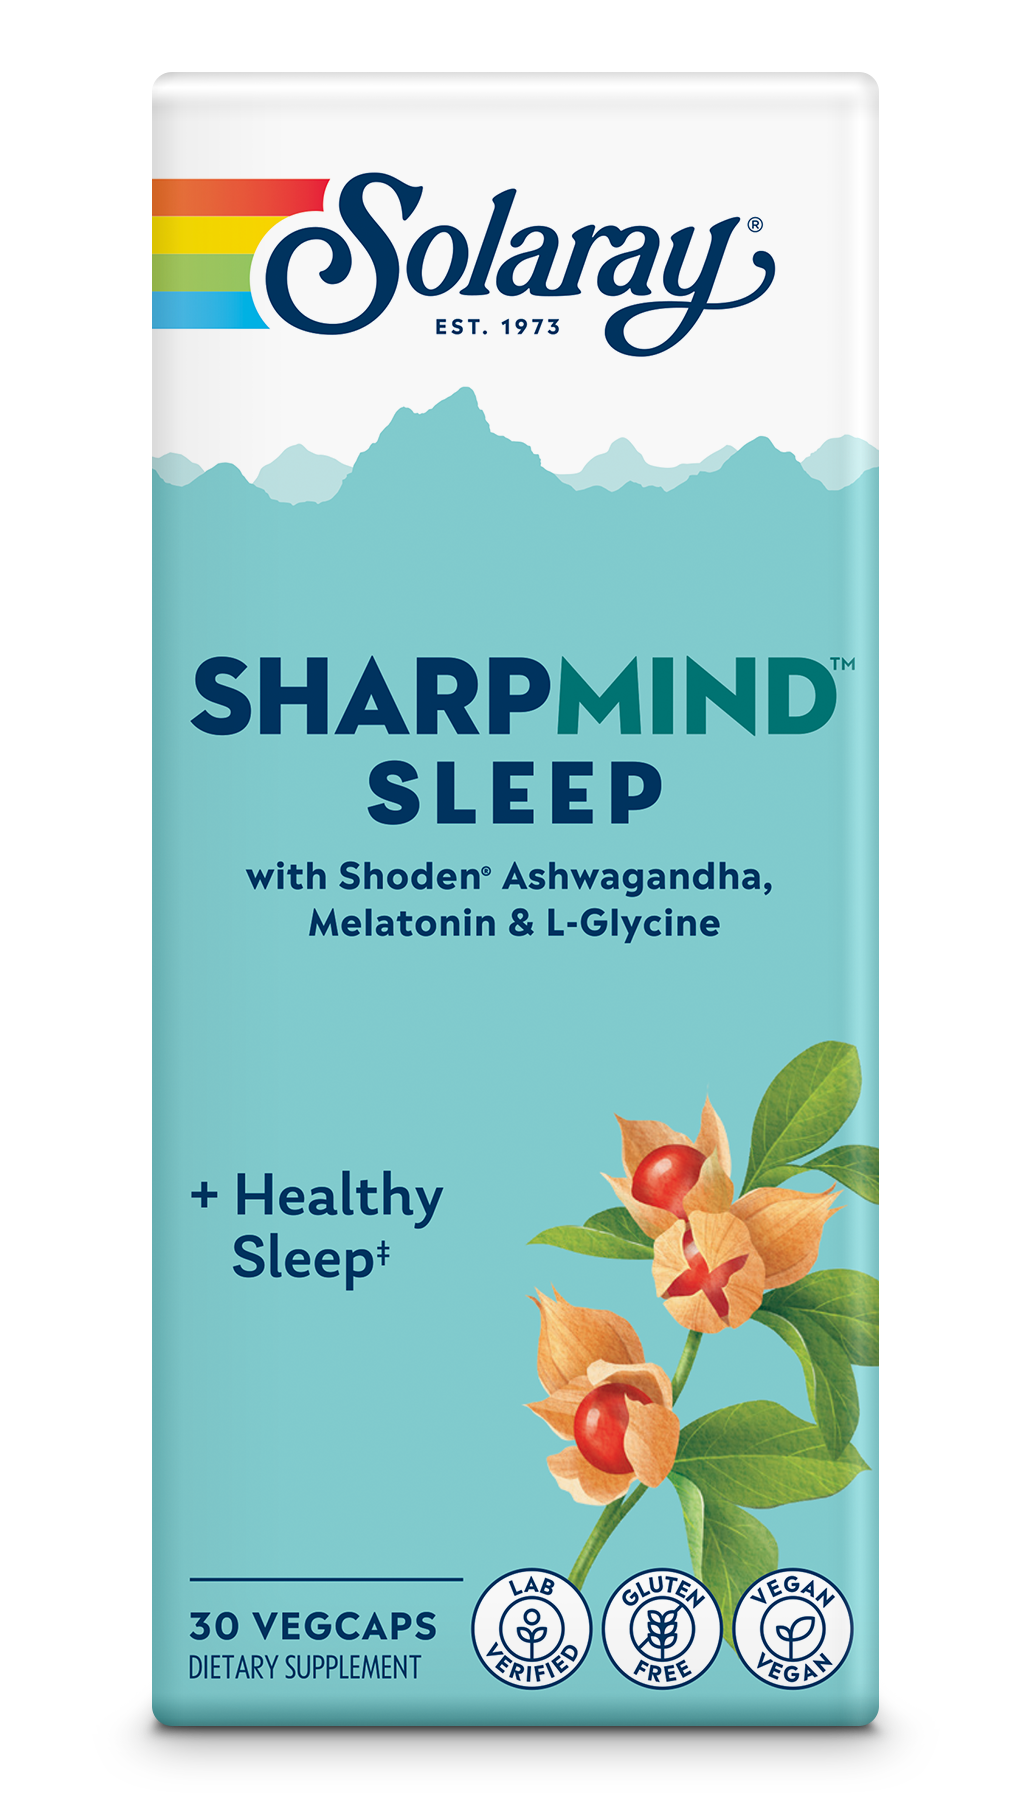 SharpMind Nootropics Sleep